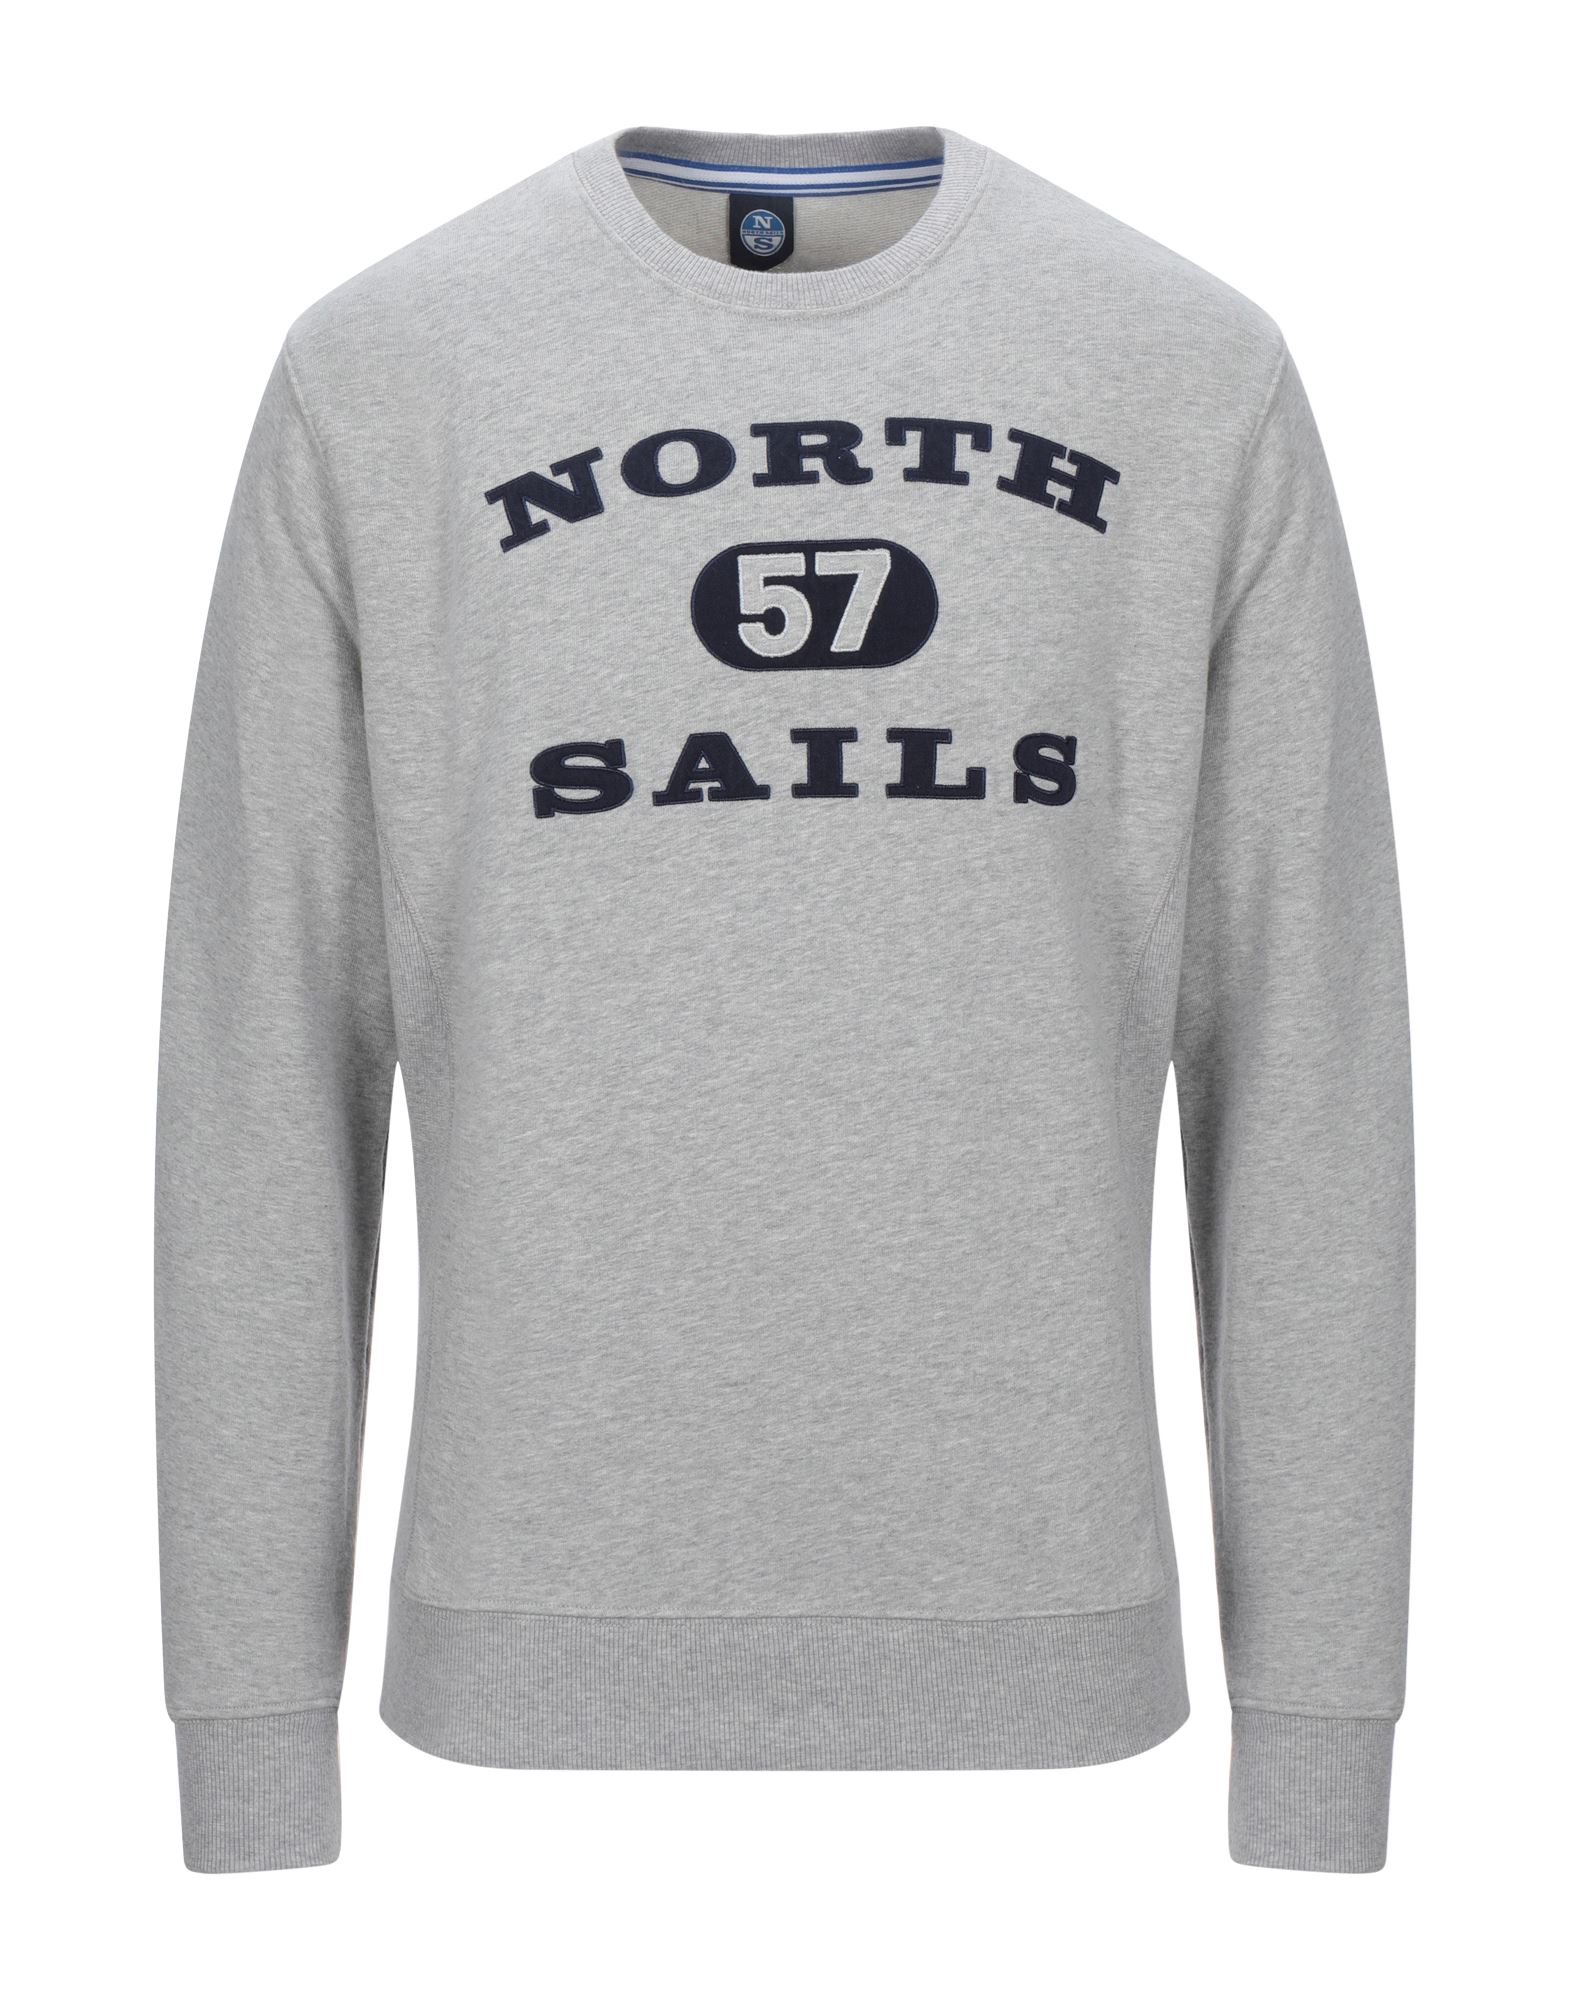 NORTH SAILS Sweatshirts - Item 12535285